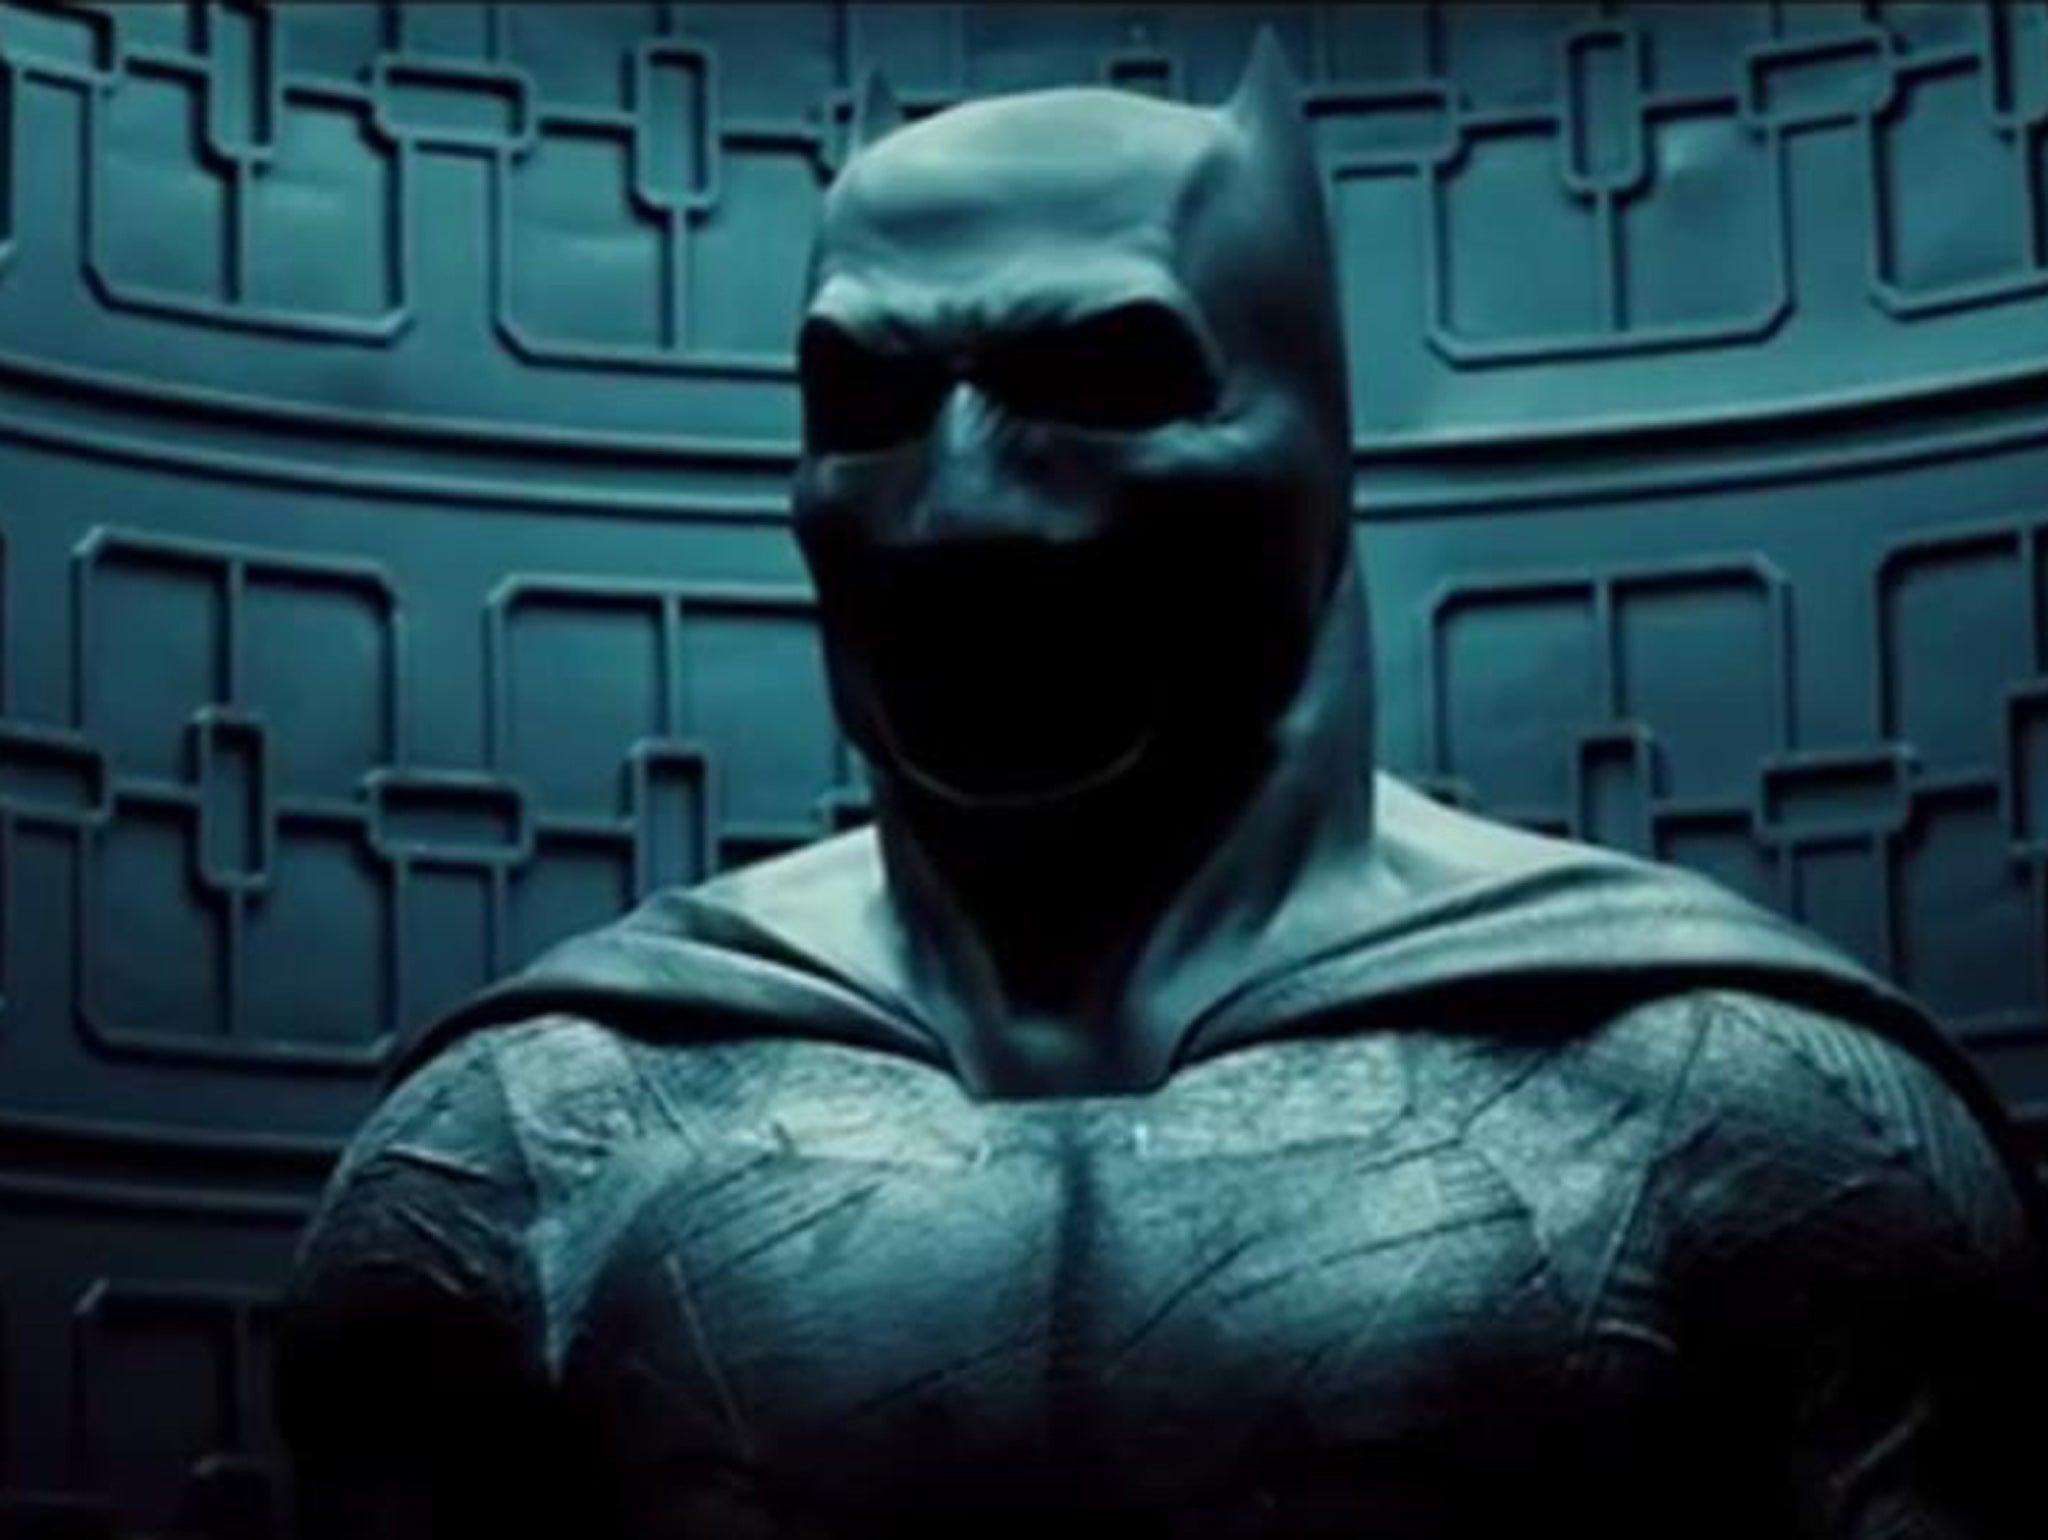 Ben Affleck's body armour in Batman v Superman